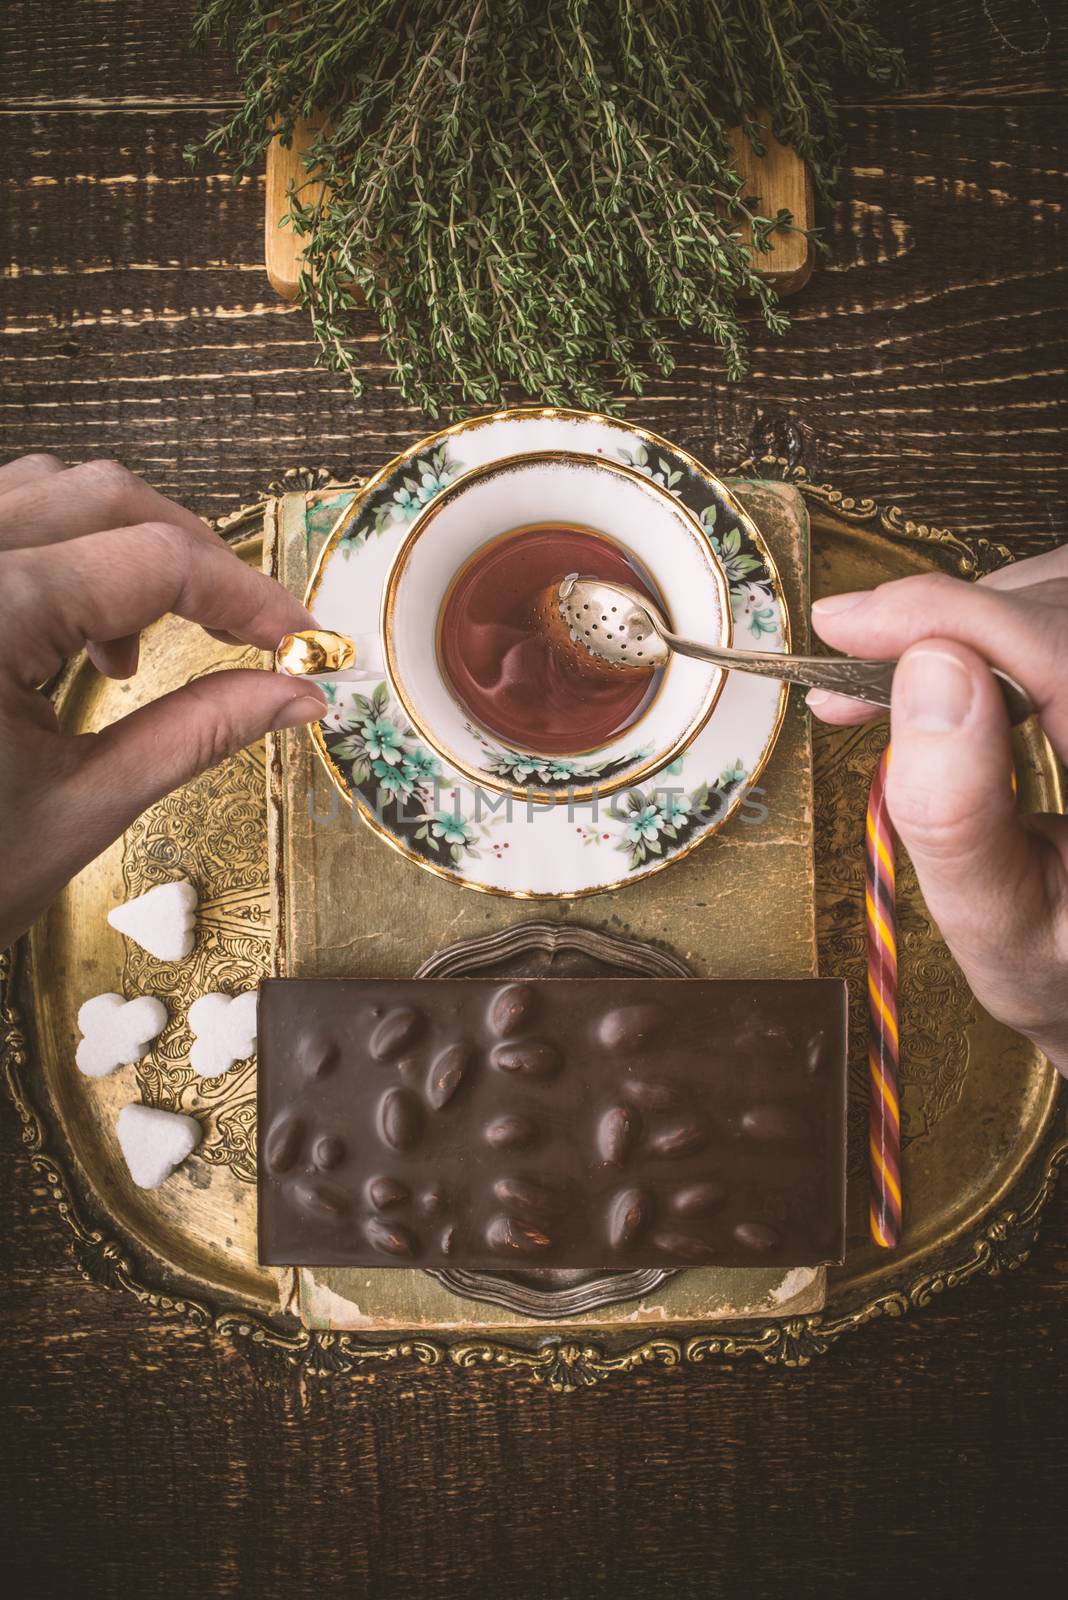 Drinking tea with chocolate vertical by Deniskarpenkov